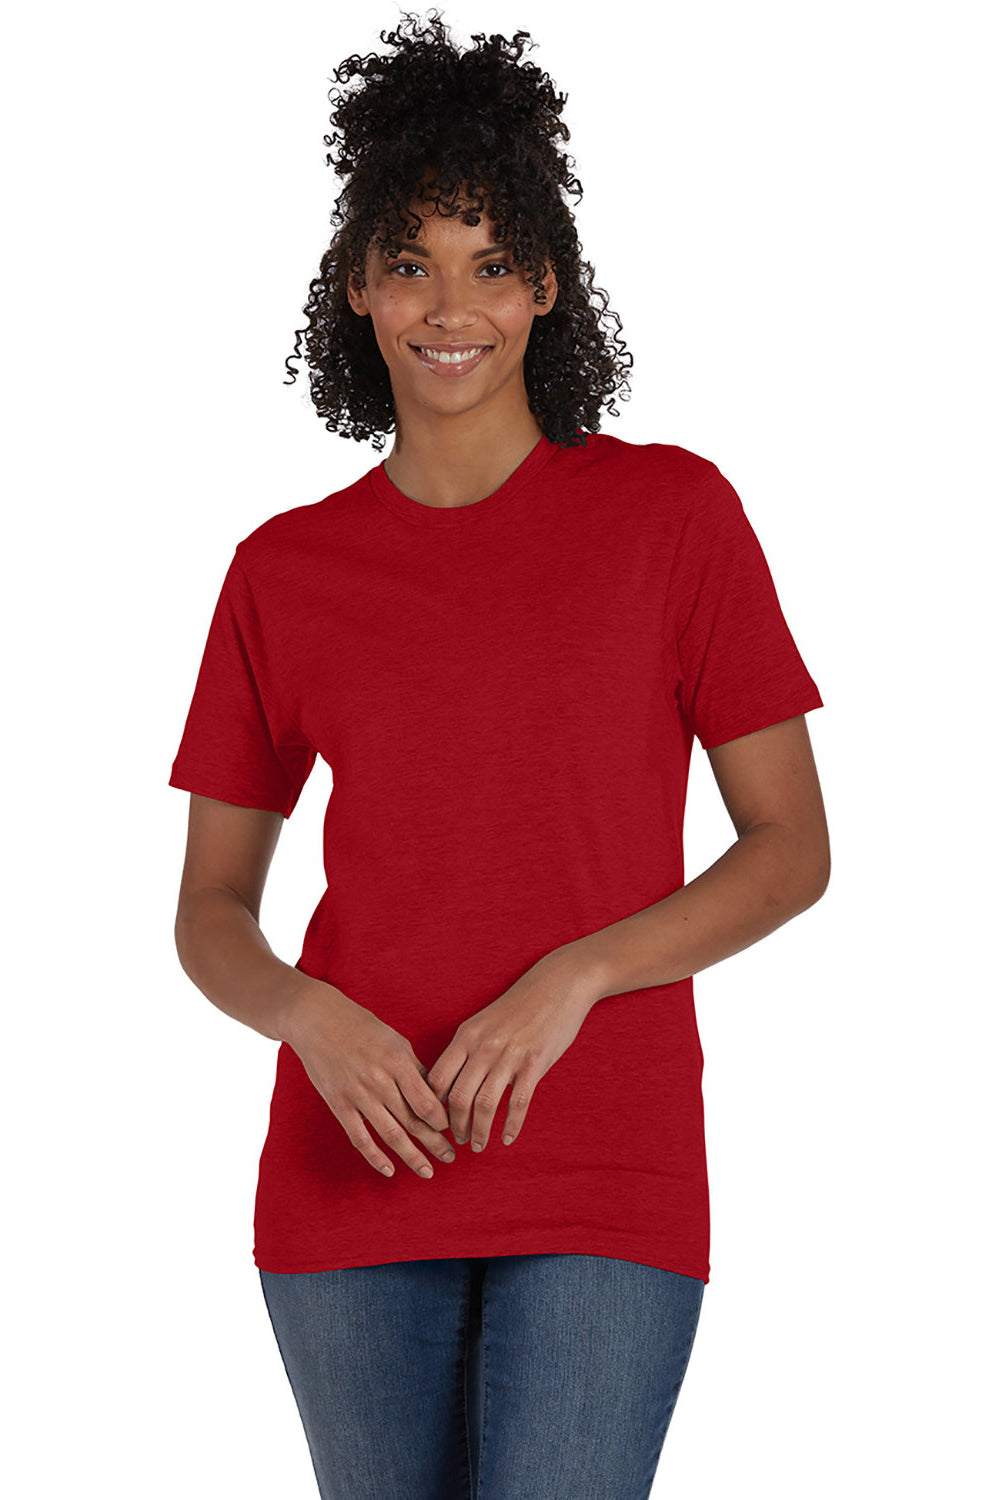 Hanes 4980 Mens Nano-T Short Sleeve Crewneck T-Shirt Heather Pepper Red Front